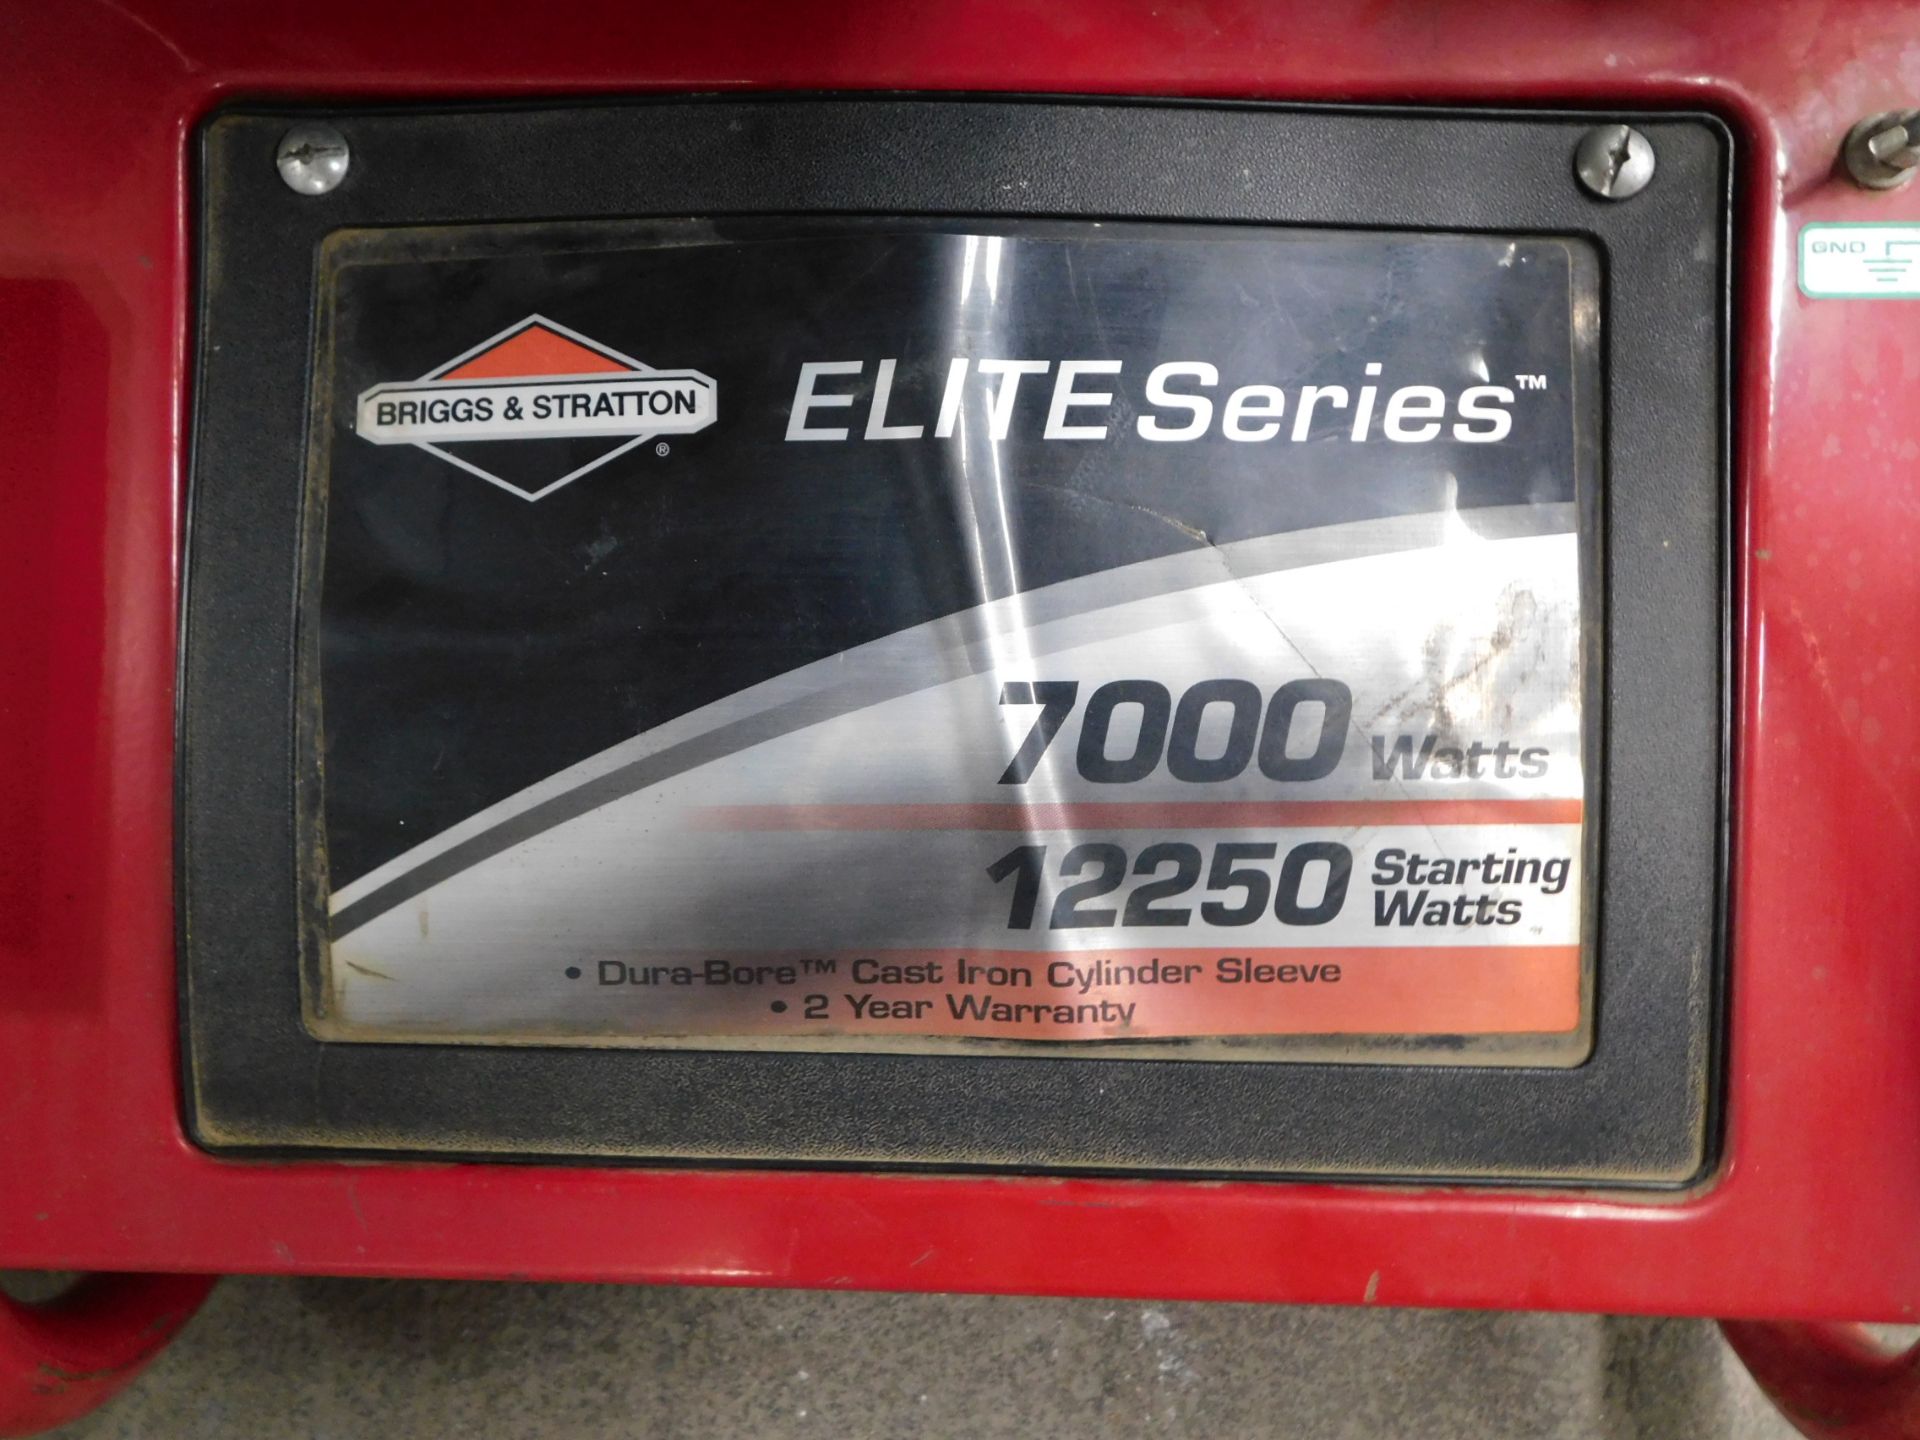 Briggs & Stratton elite Series 7000 Wat Gas Powered Generator - Image 6 of 6